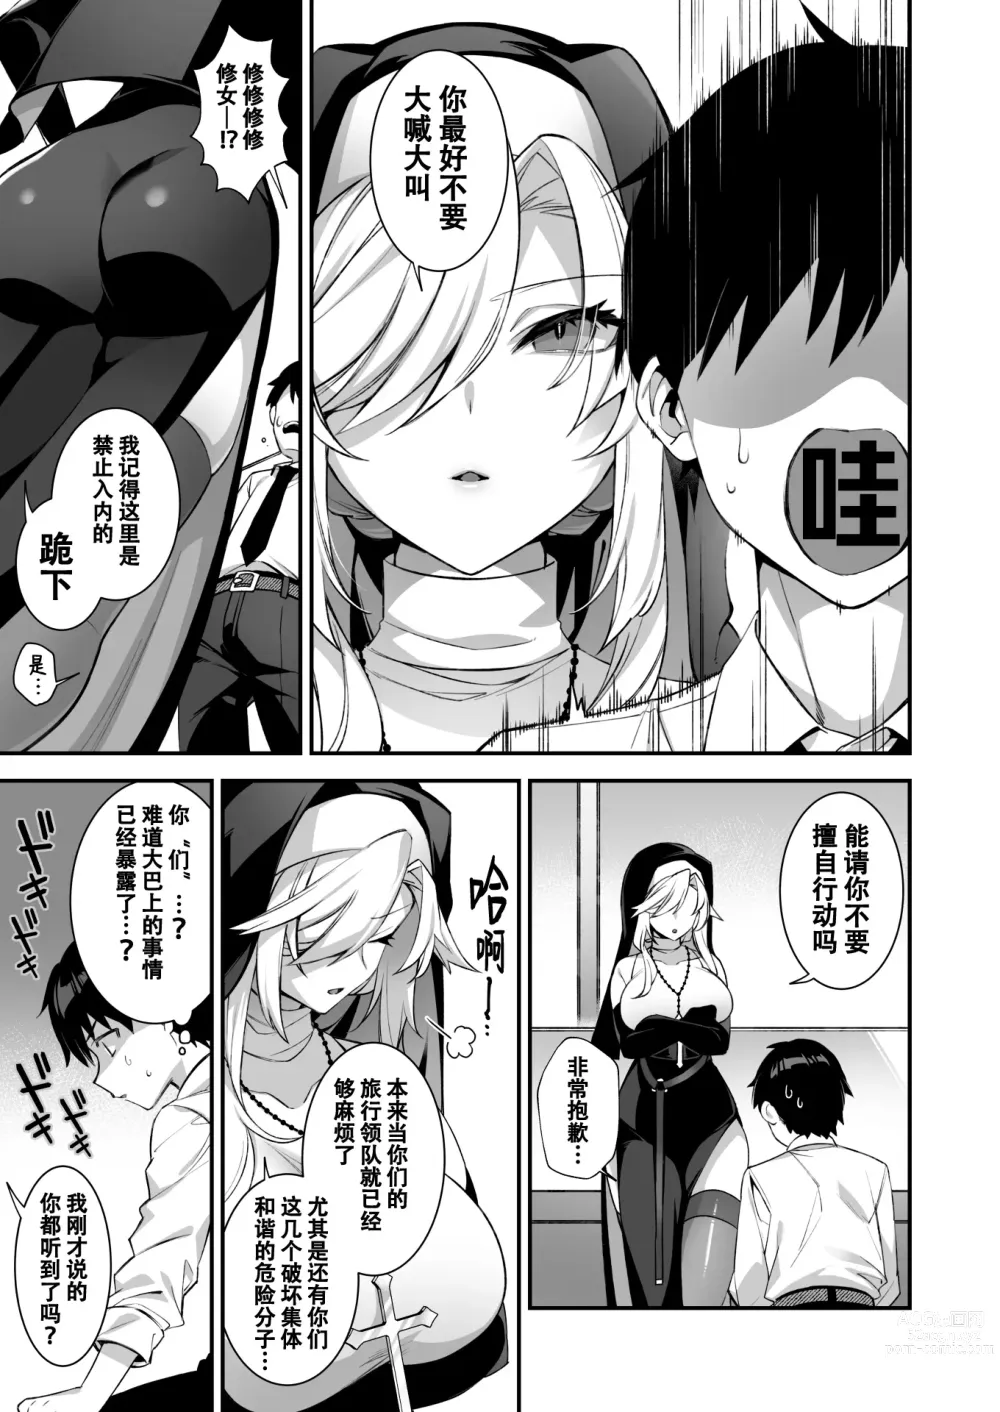 Page 14 of manga Hypnosis 3 (uncensored)